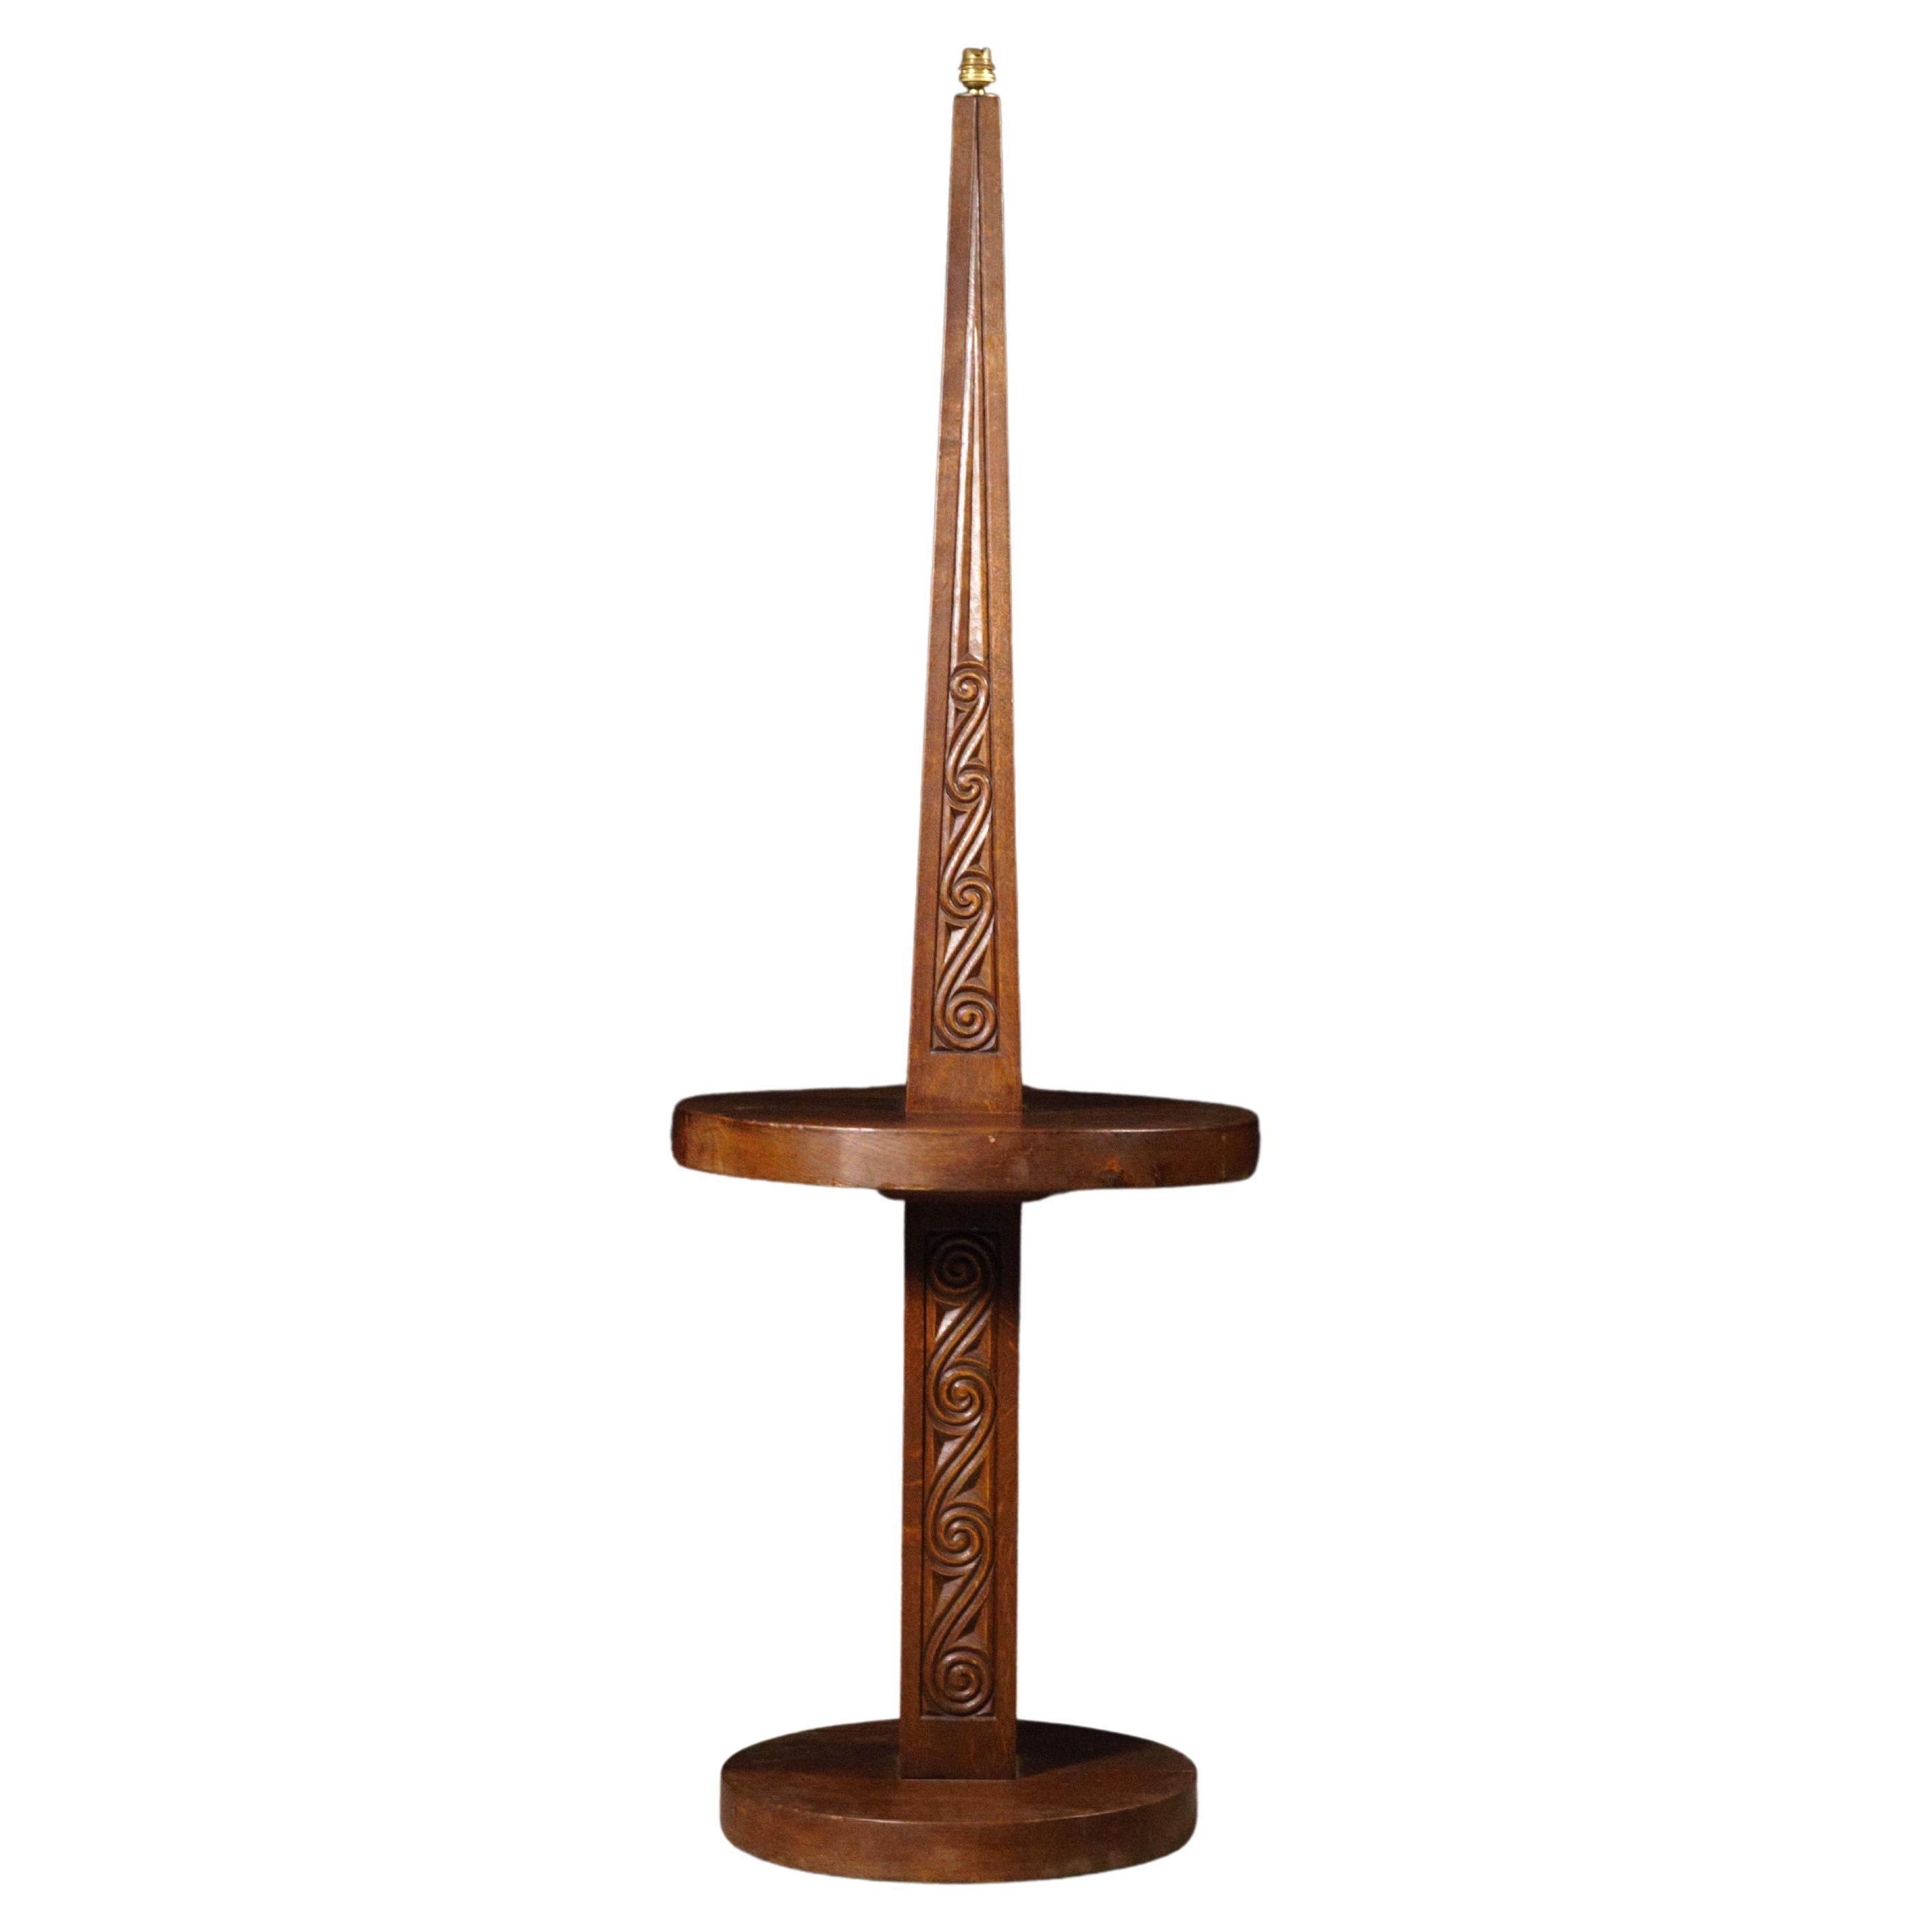 A Celtic Floor Lamp by Joseph Savina 1960s For Sale